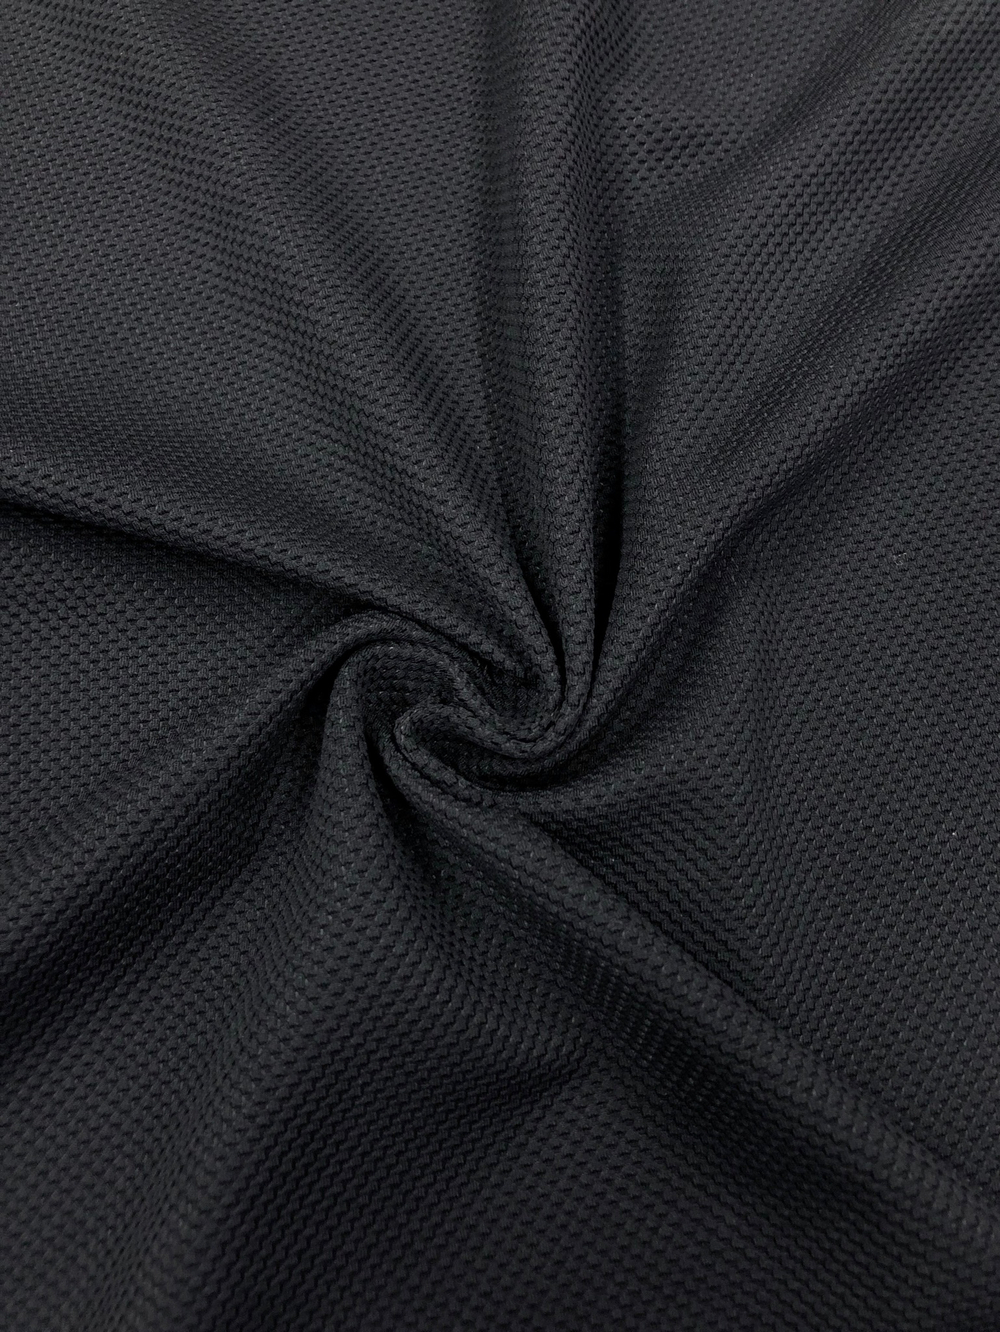 Ткань трикотаж Лакоста крупная, цв. Черный арт. 324715